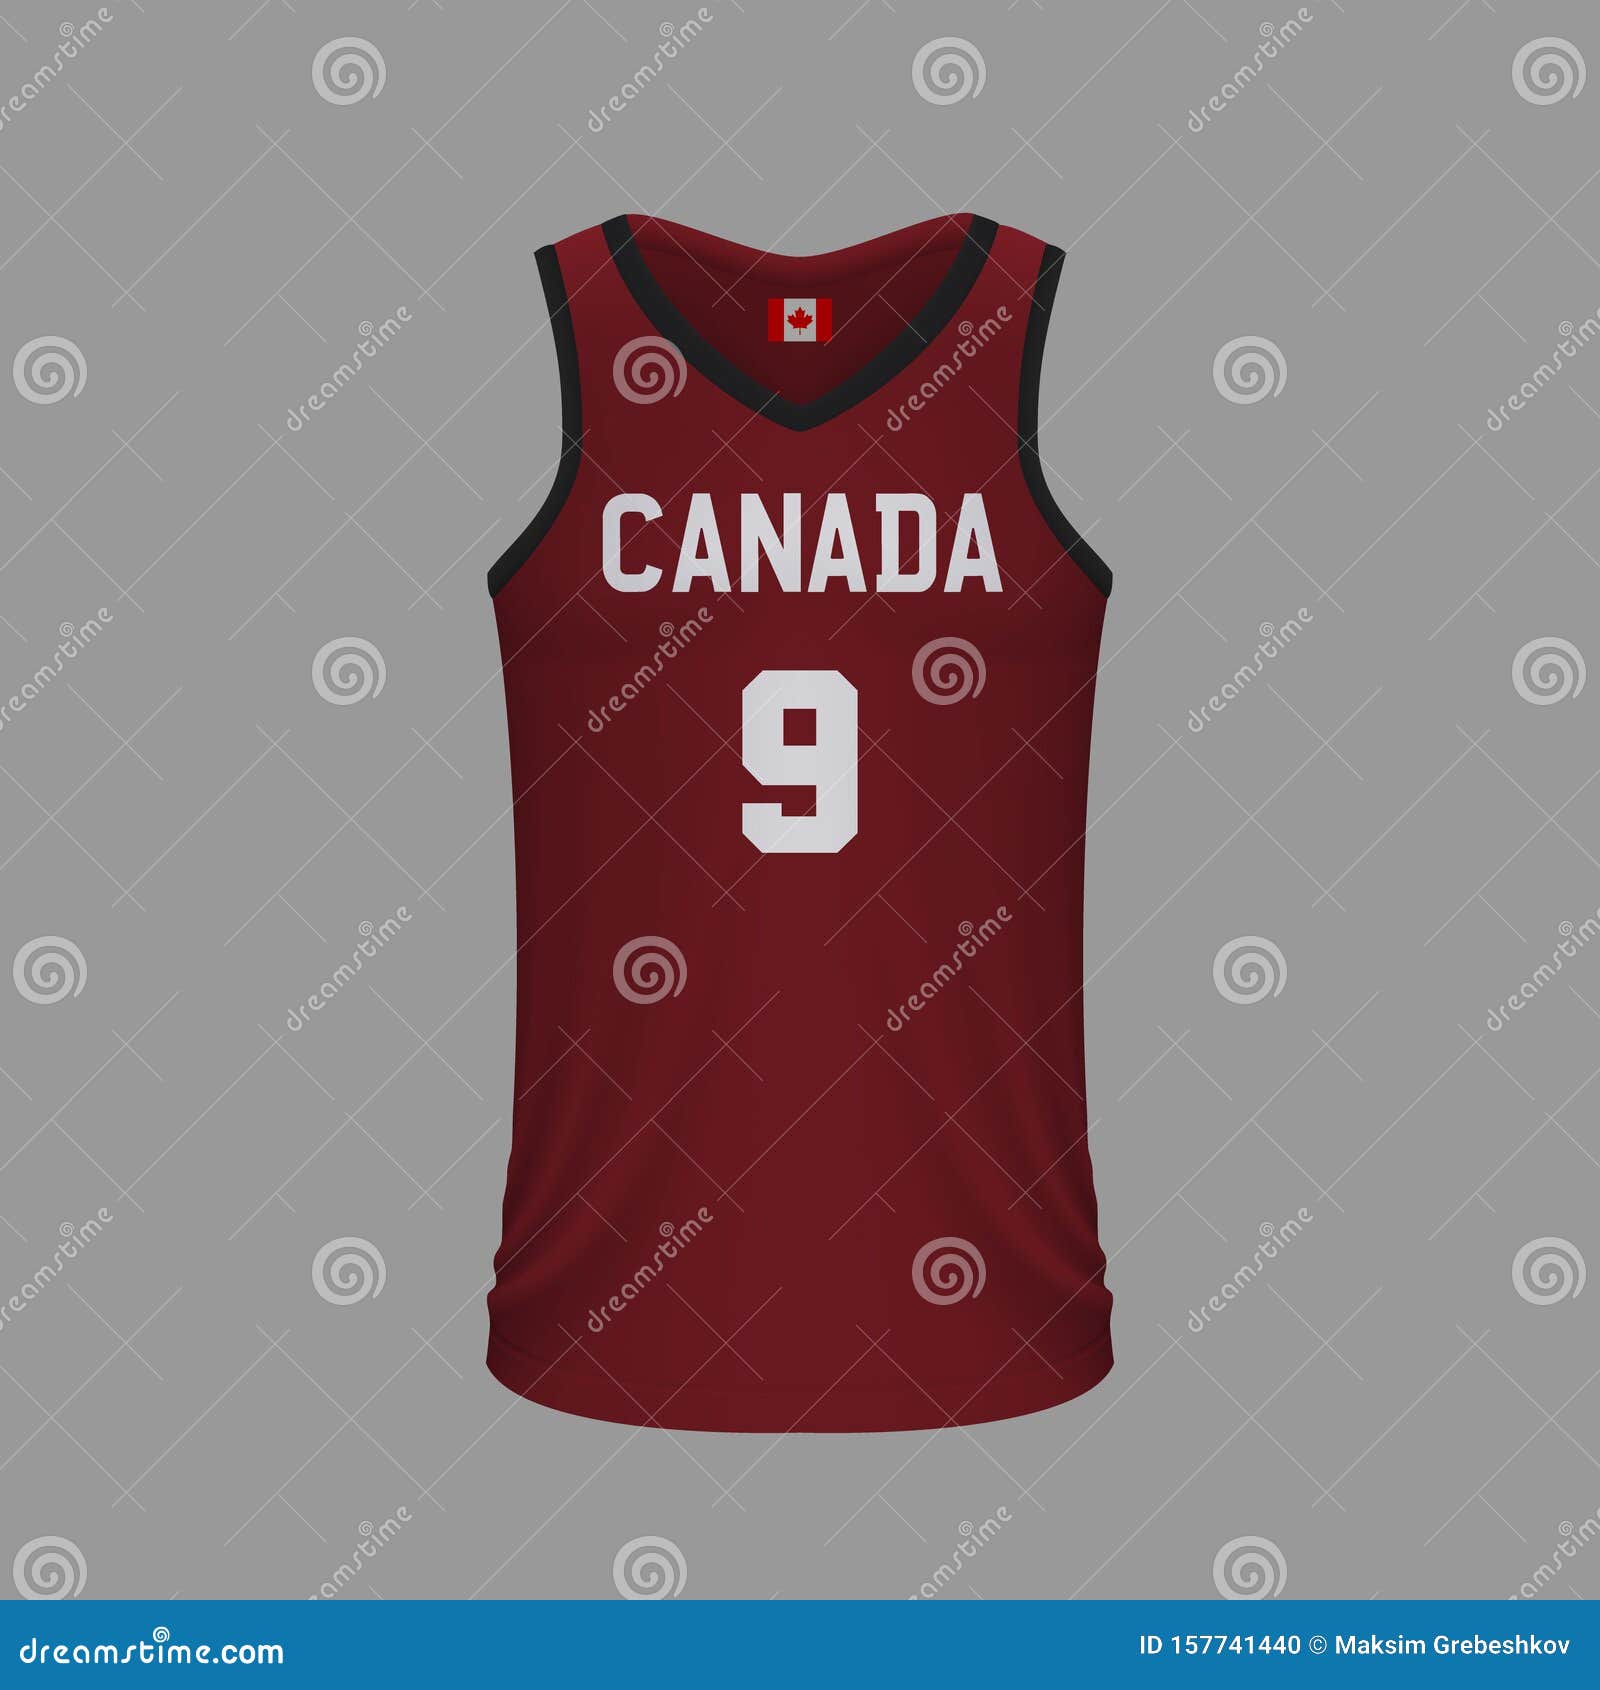 Canada Basketball Apparel, Jerseys